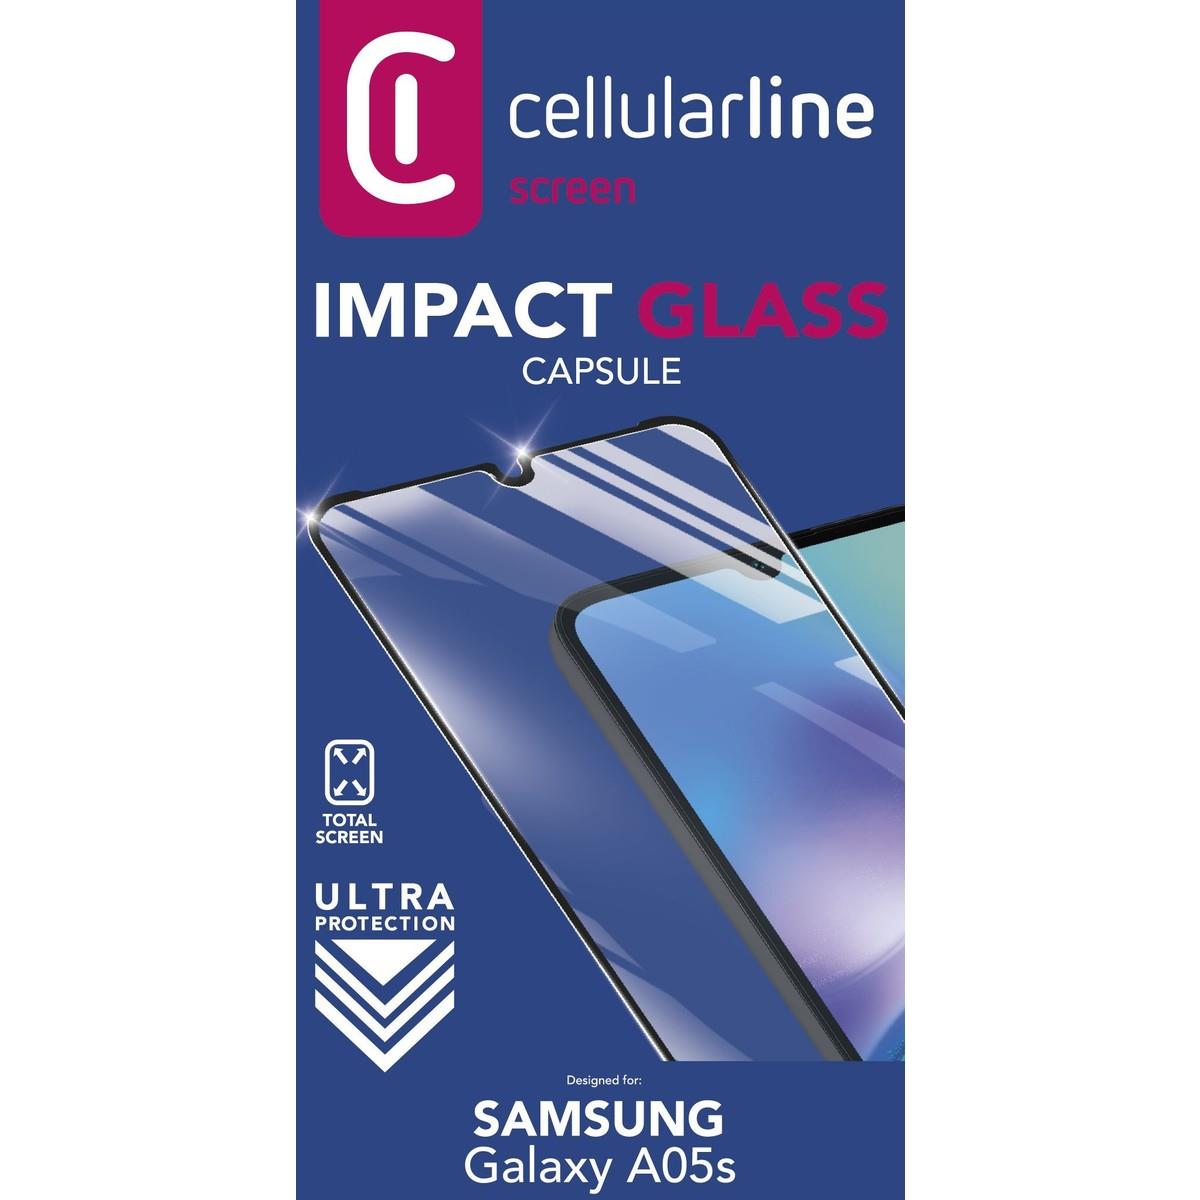 Schutzglas IMPACT GLASS CAPSULE für Samsung Galaxy A05s